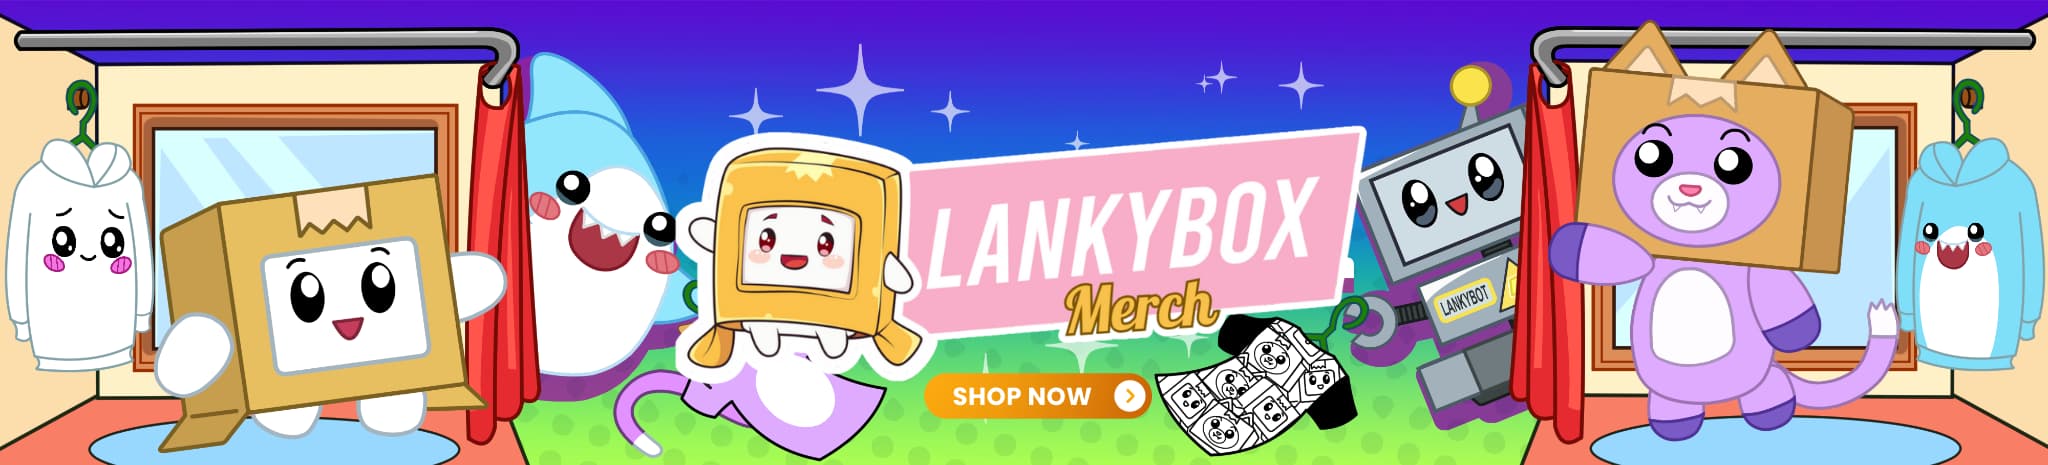 Lanky Box Merch Banner